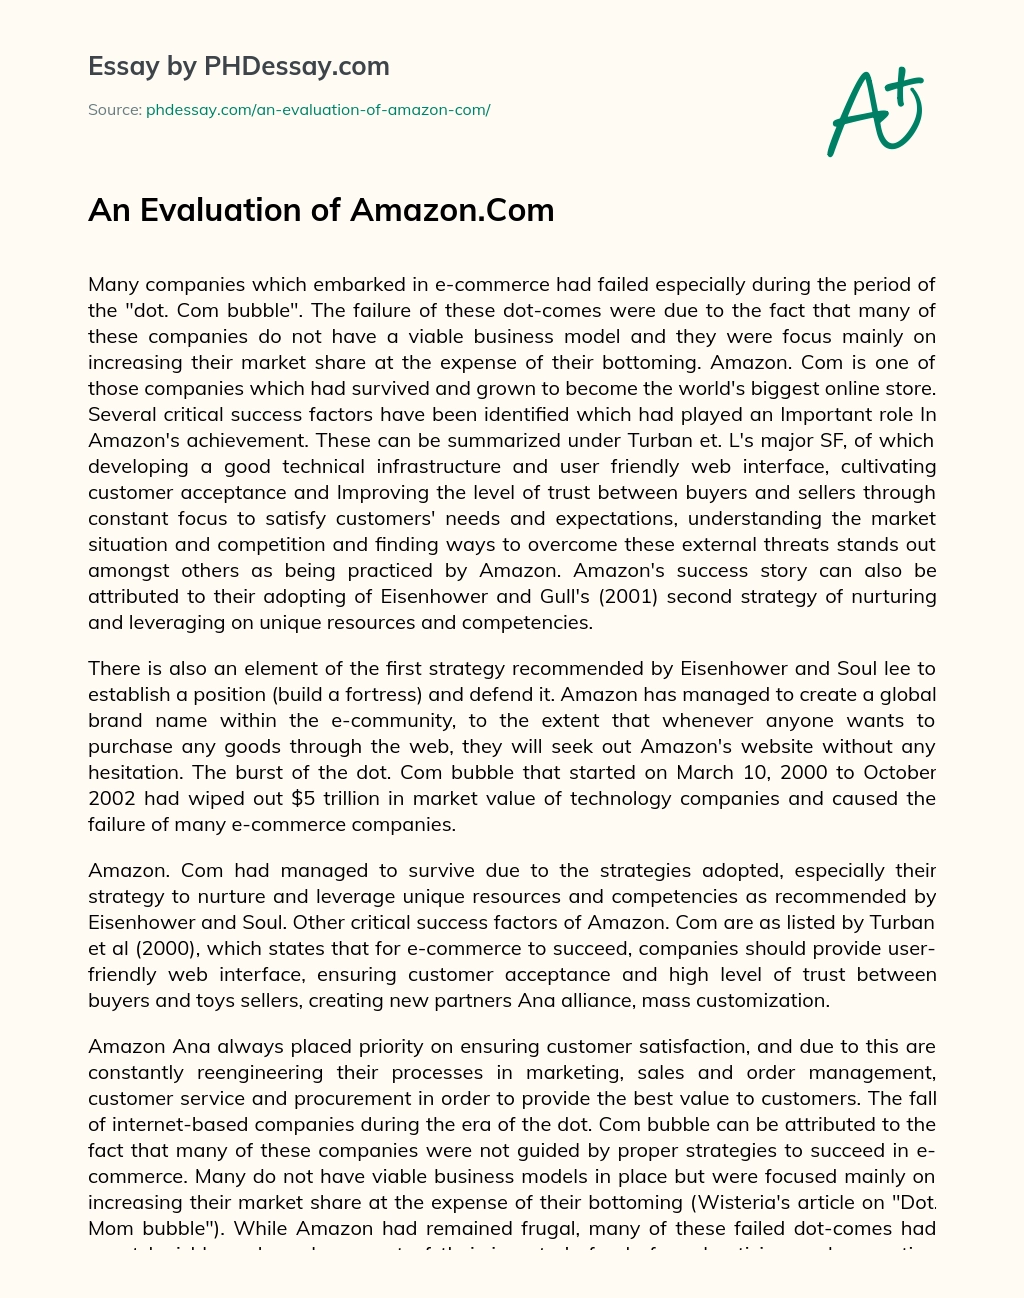 An Evaluation of Amazon.Com essay